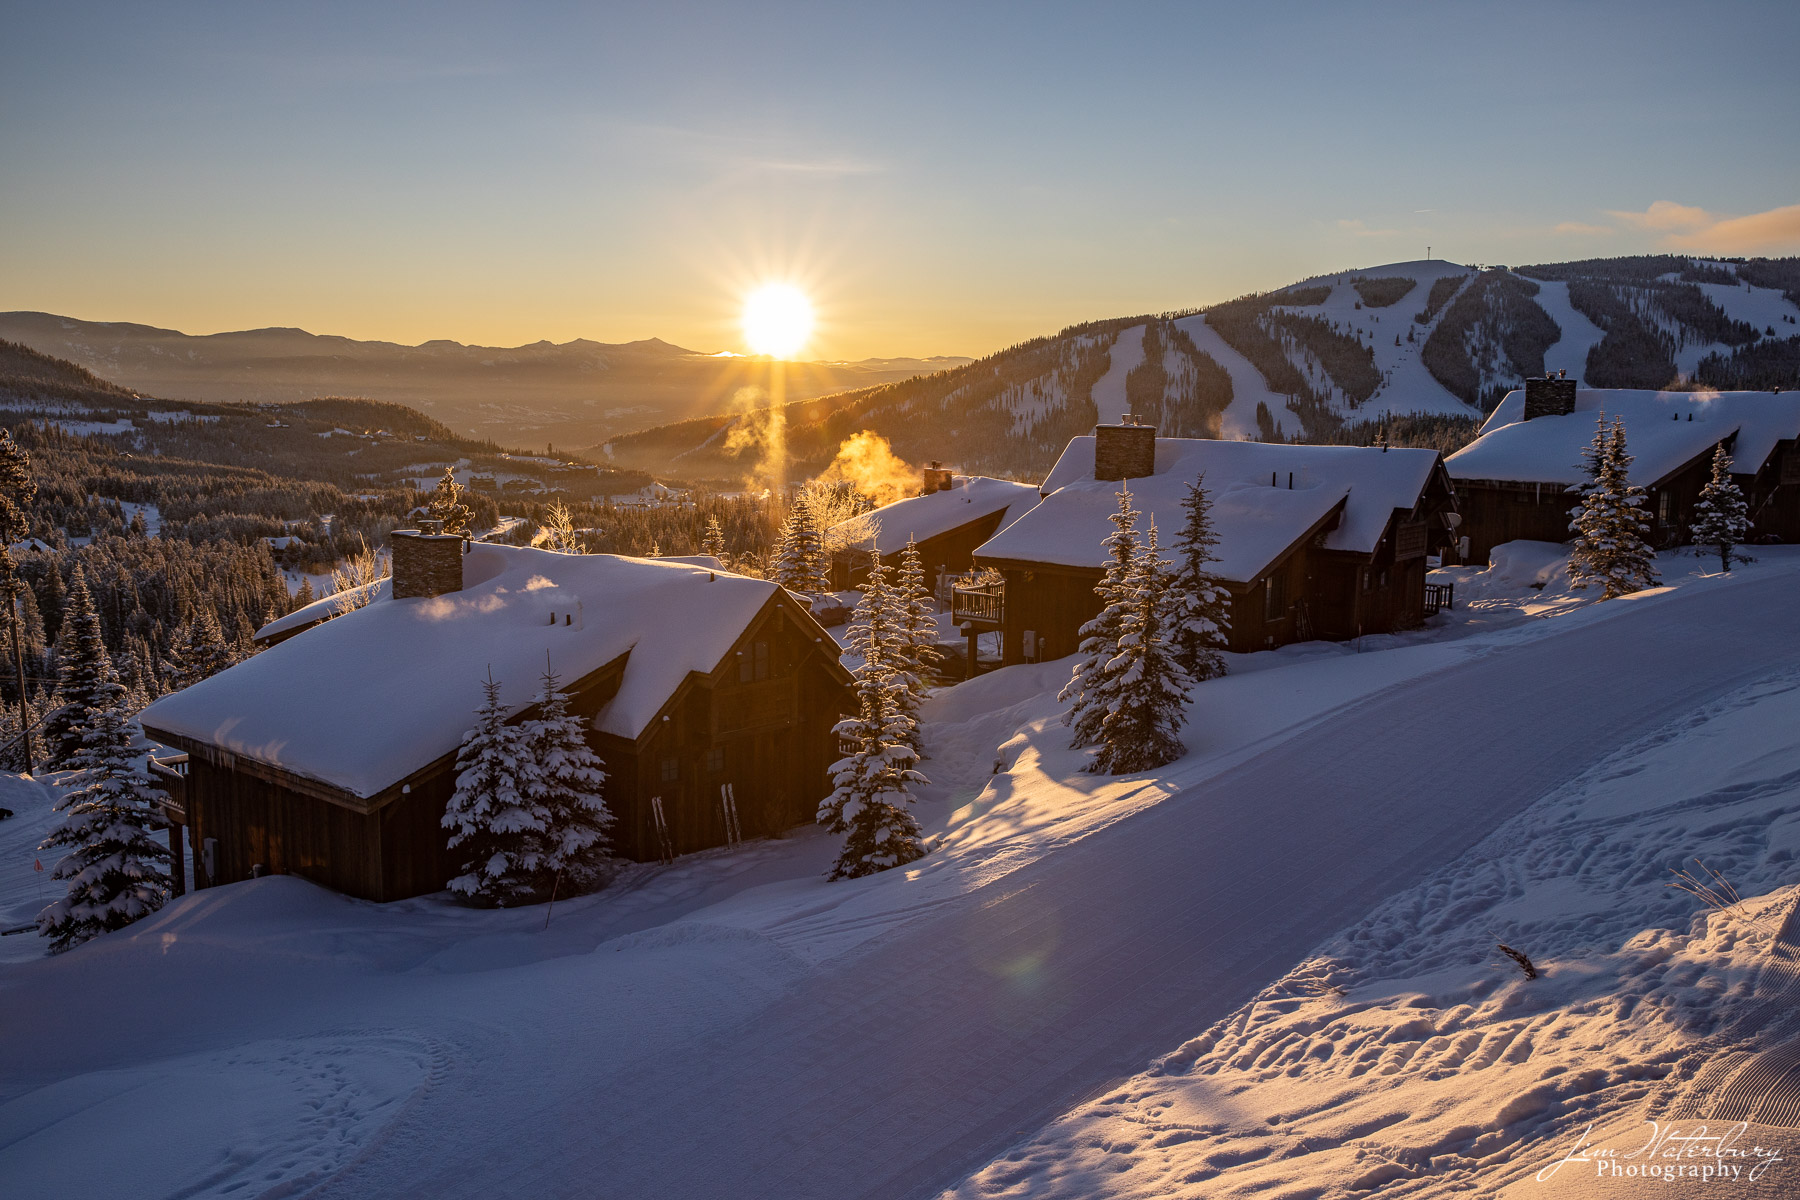 The sun rises over ski cottages set in new-fallen snow at Moonlight Basin,  Big Sky Ski Resort, Montana.